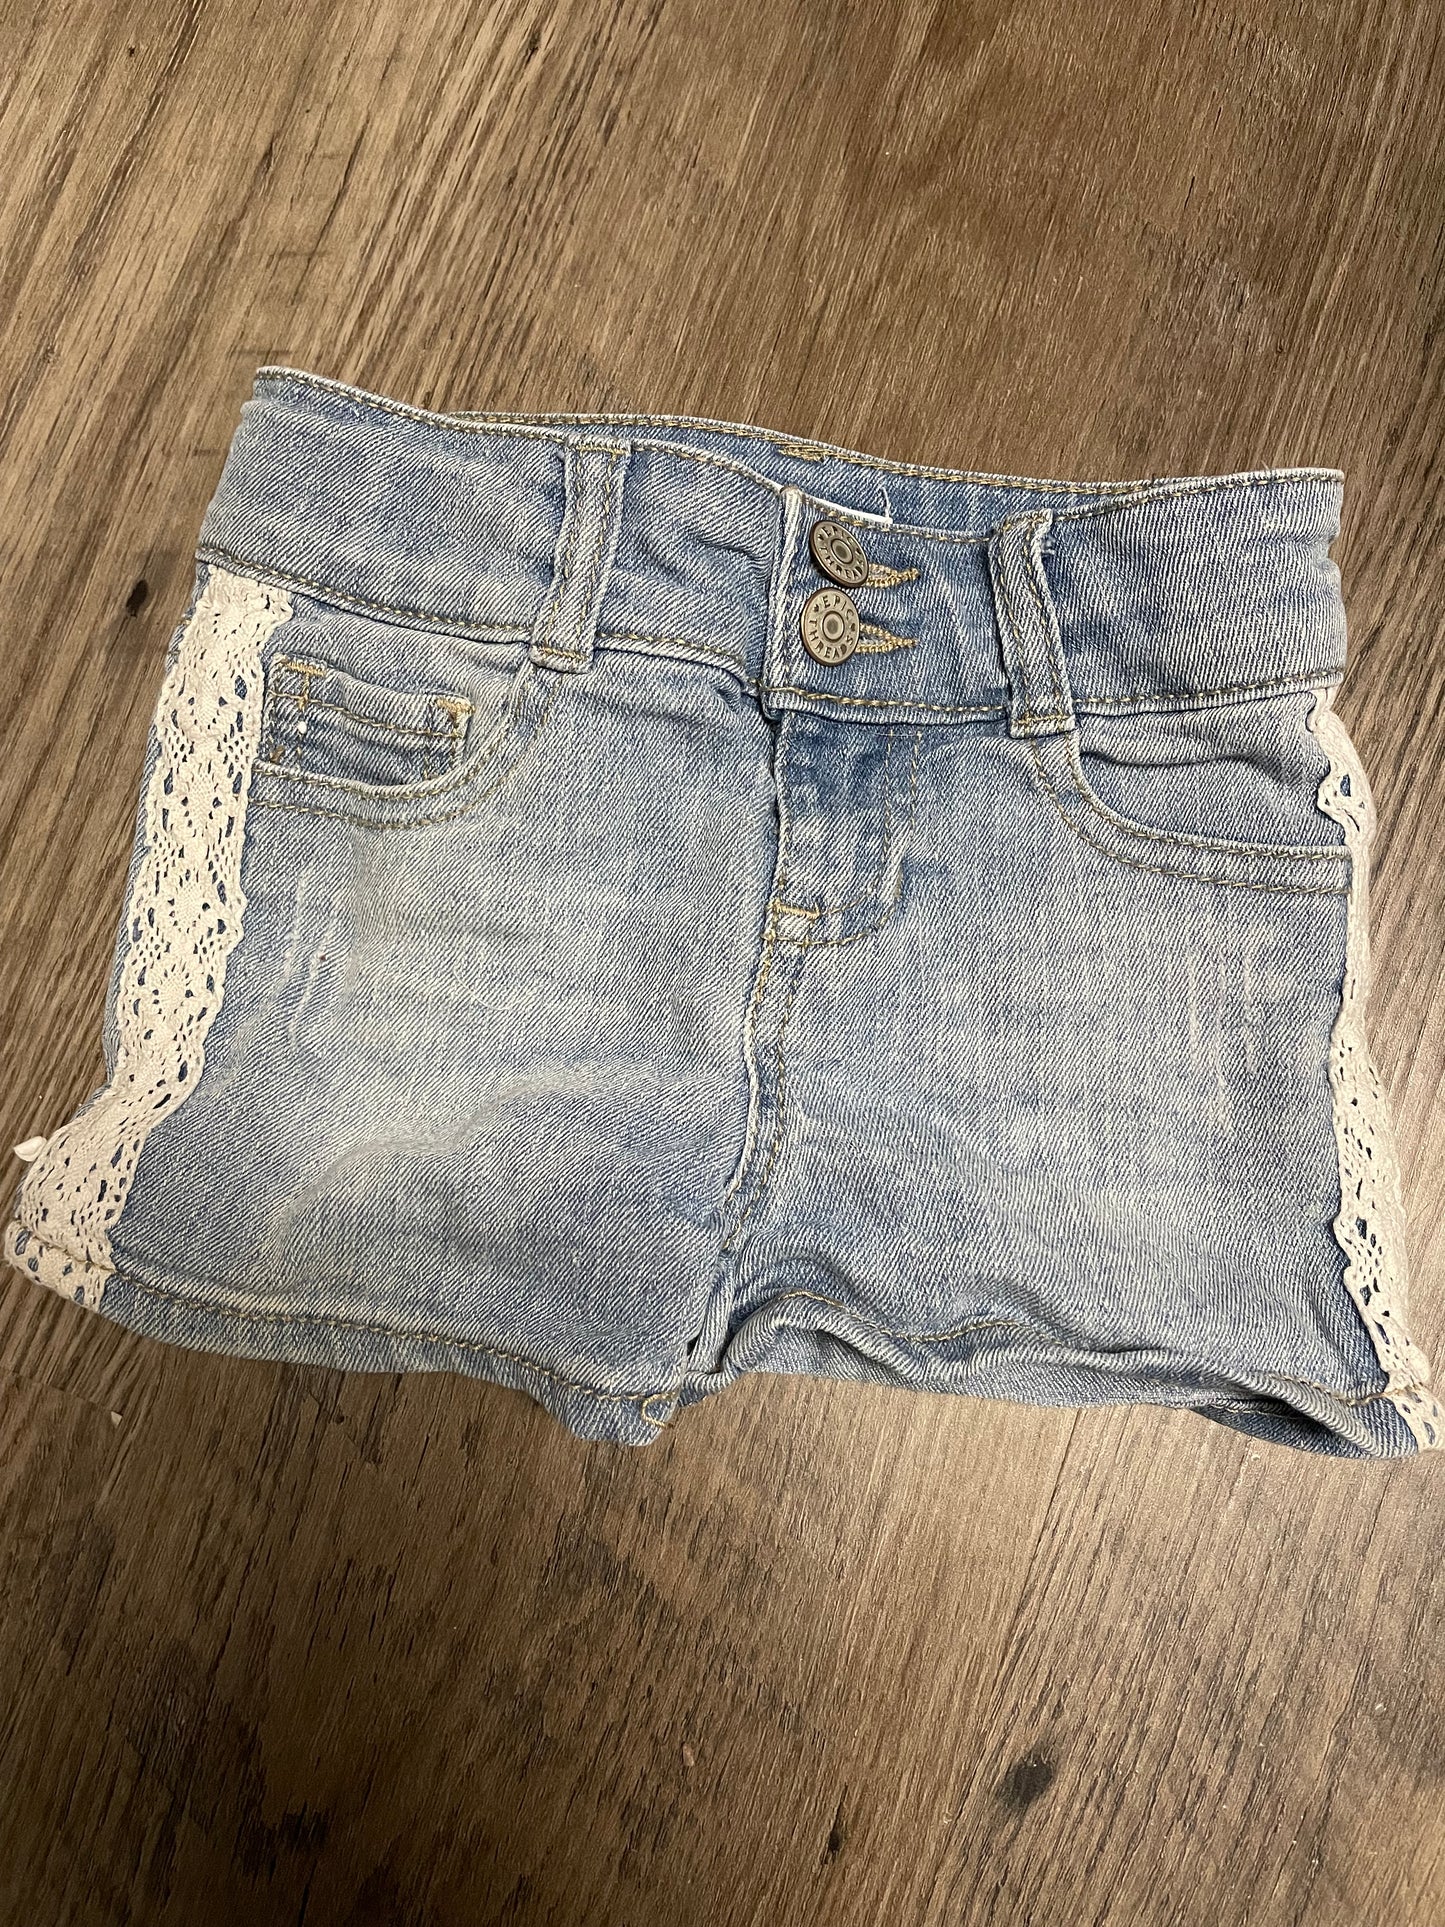 Toddler girl 3T jean shorts. Epic Thread